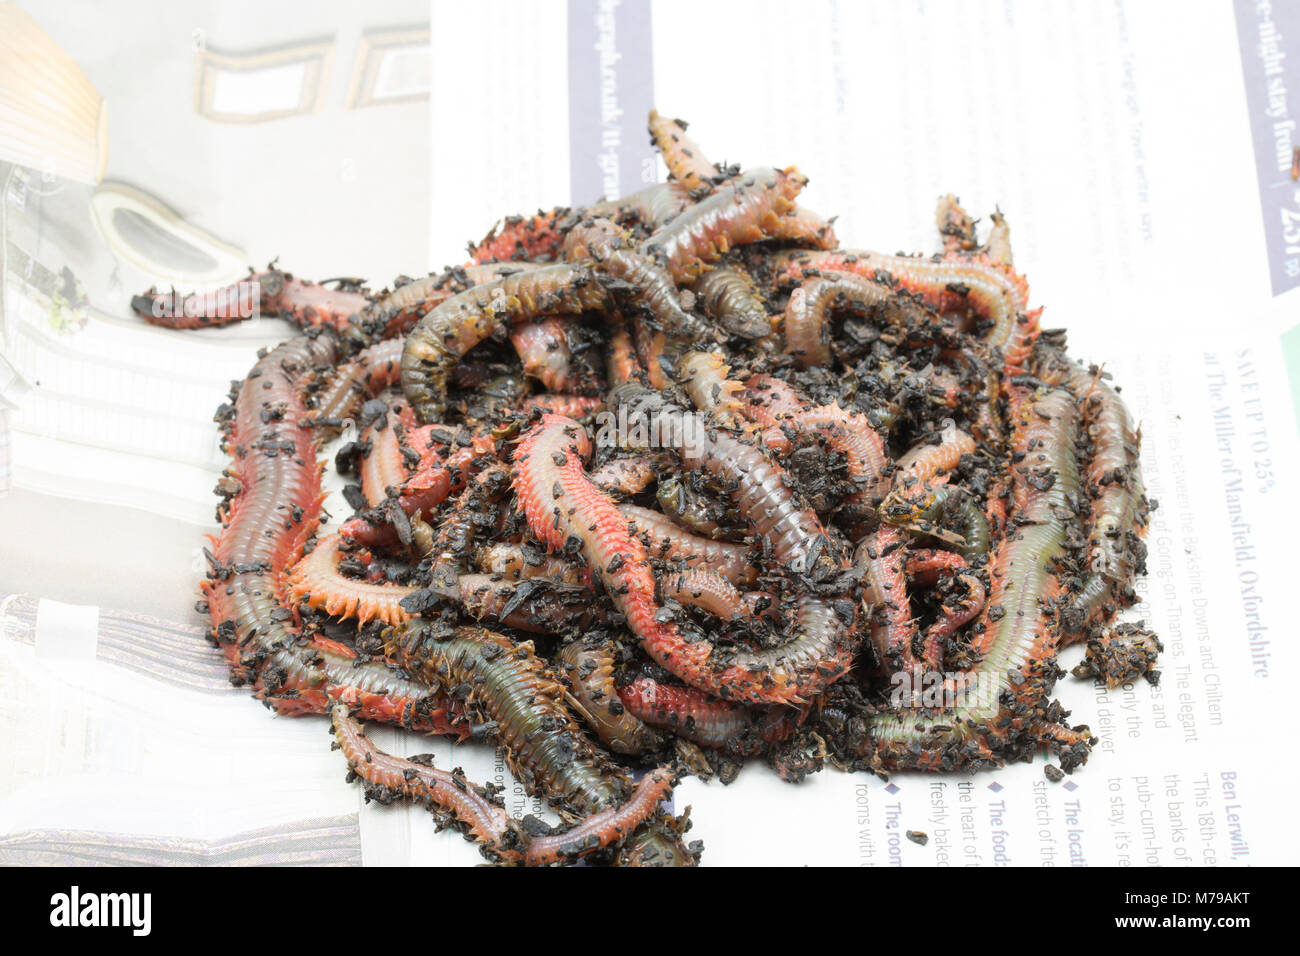 King ragworm Attila virens, Dorset UK. The king ragworm is a